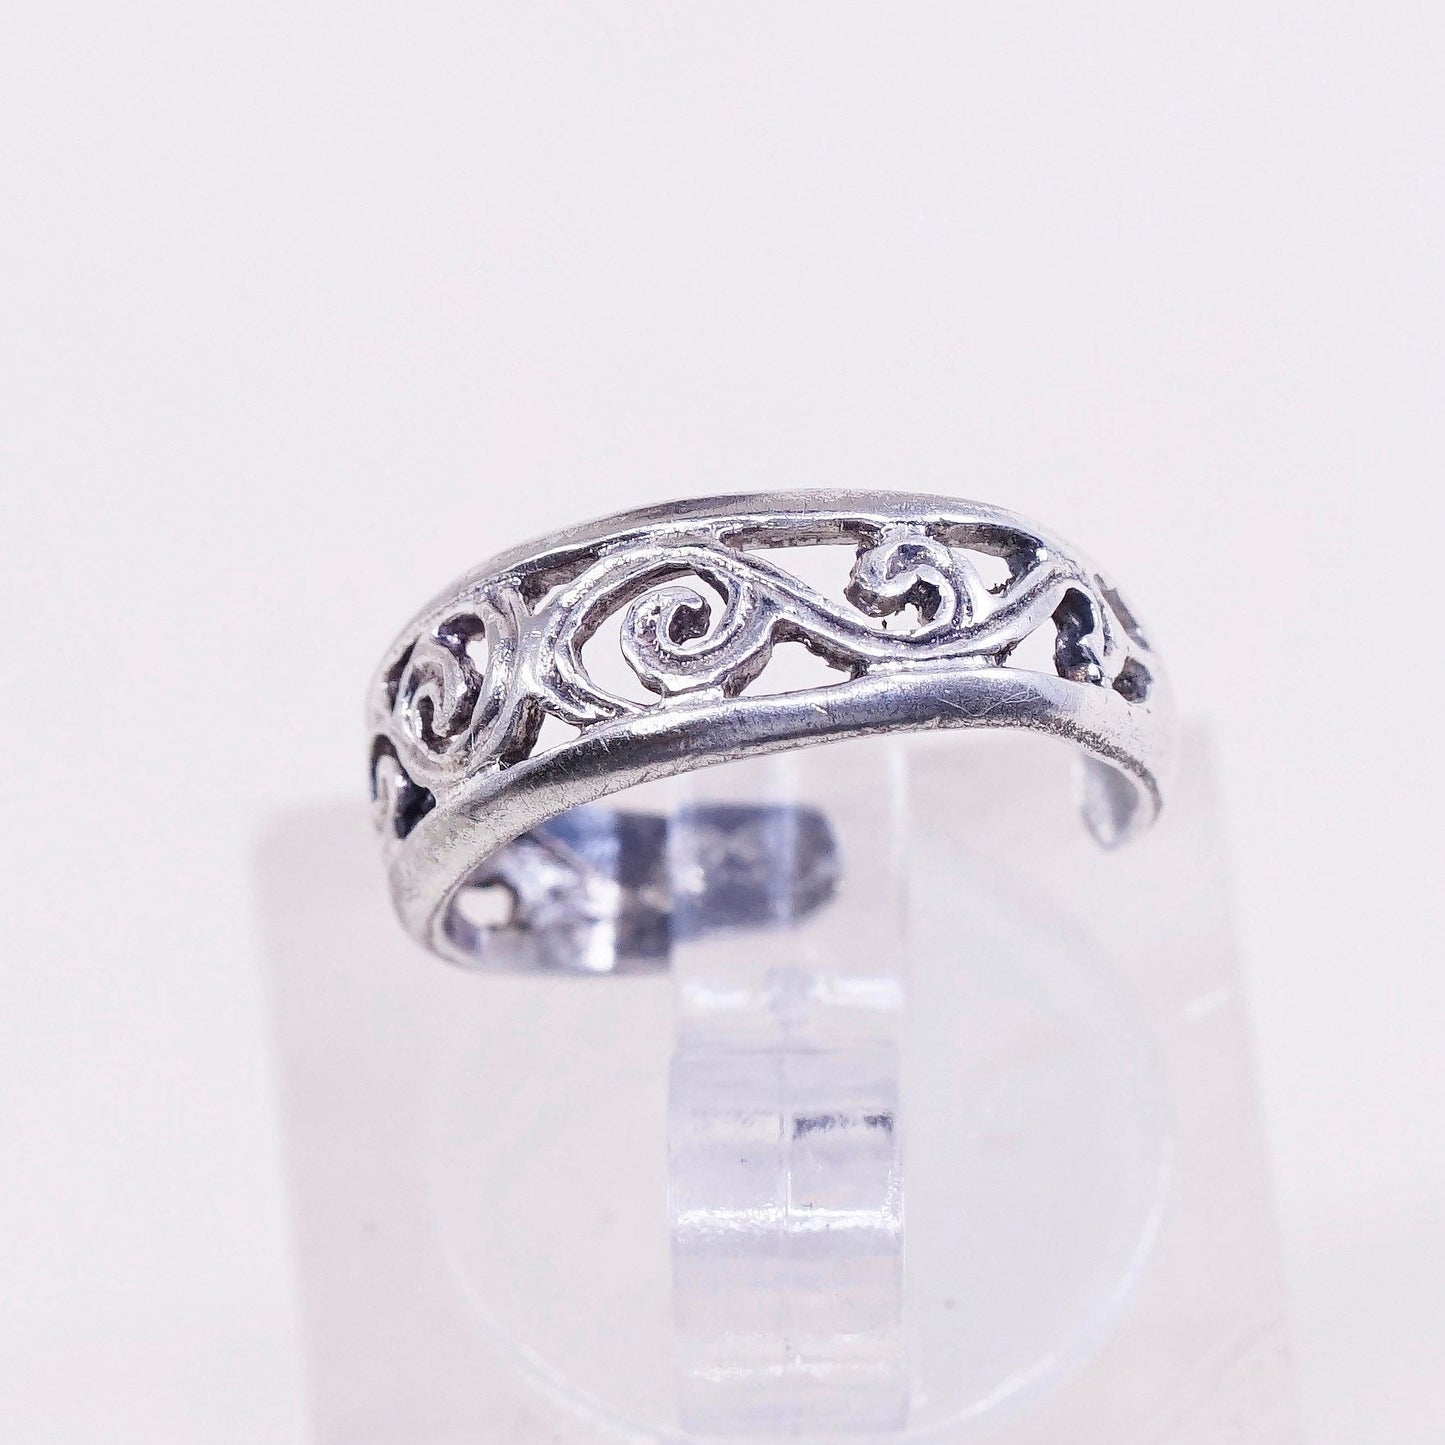 sz 2.5, vintage Sterling silver handmade ring, 925 filigree swirl band